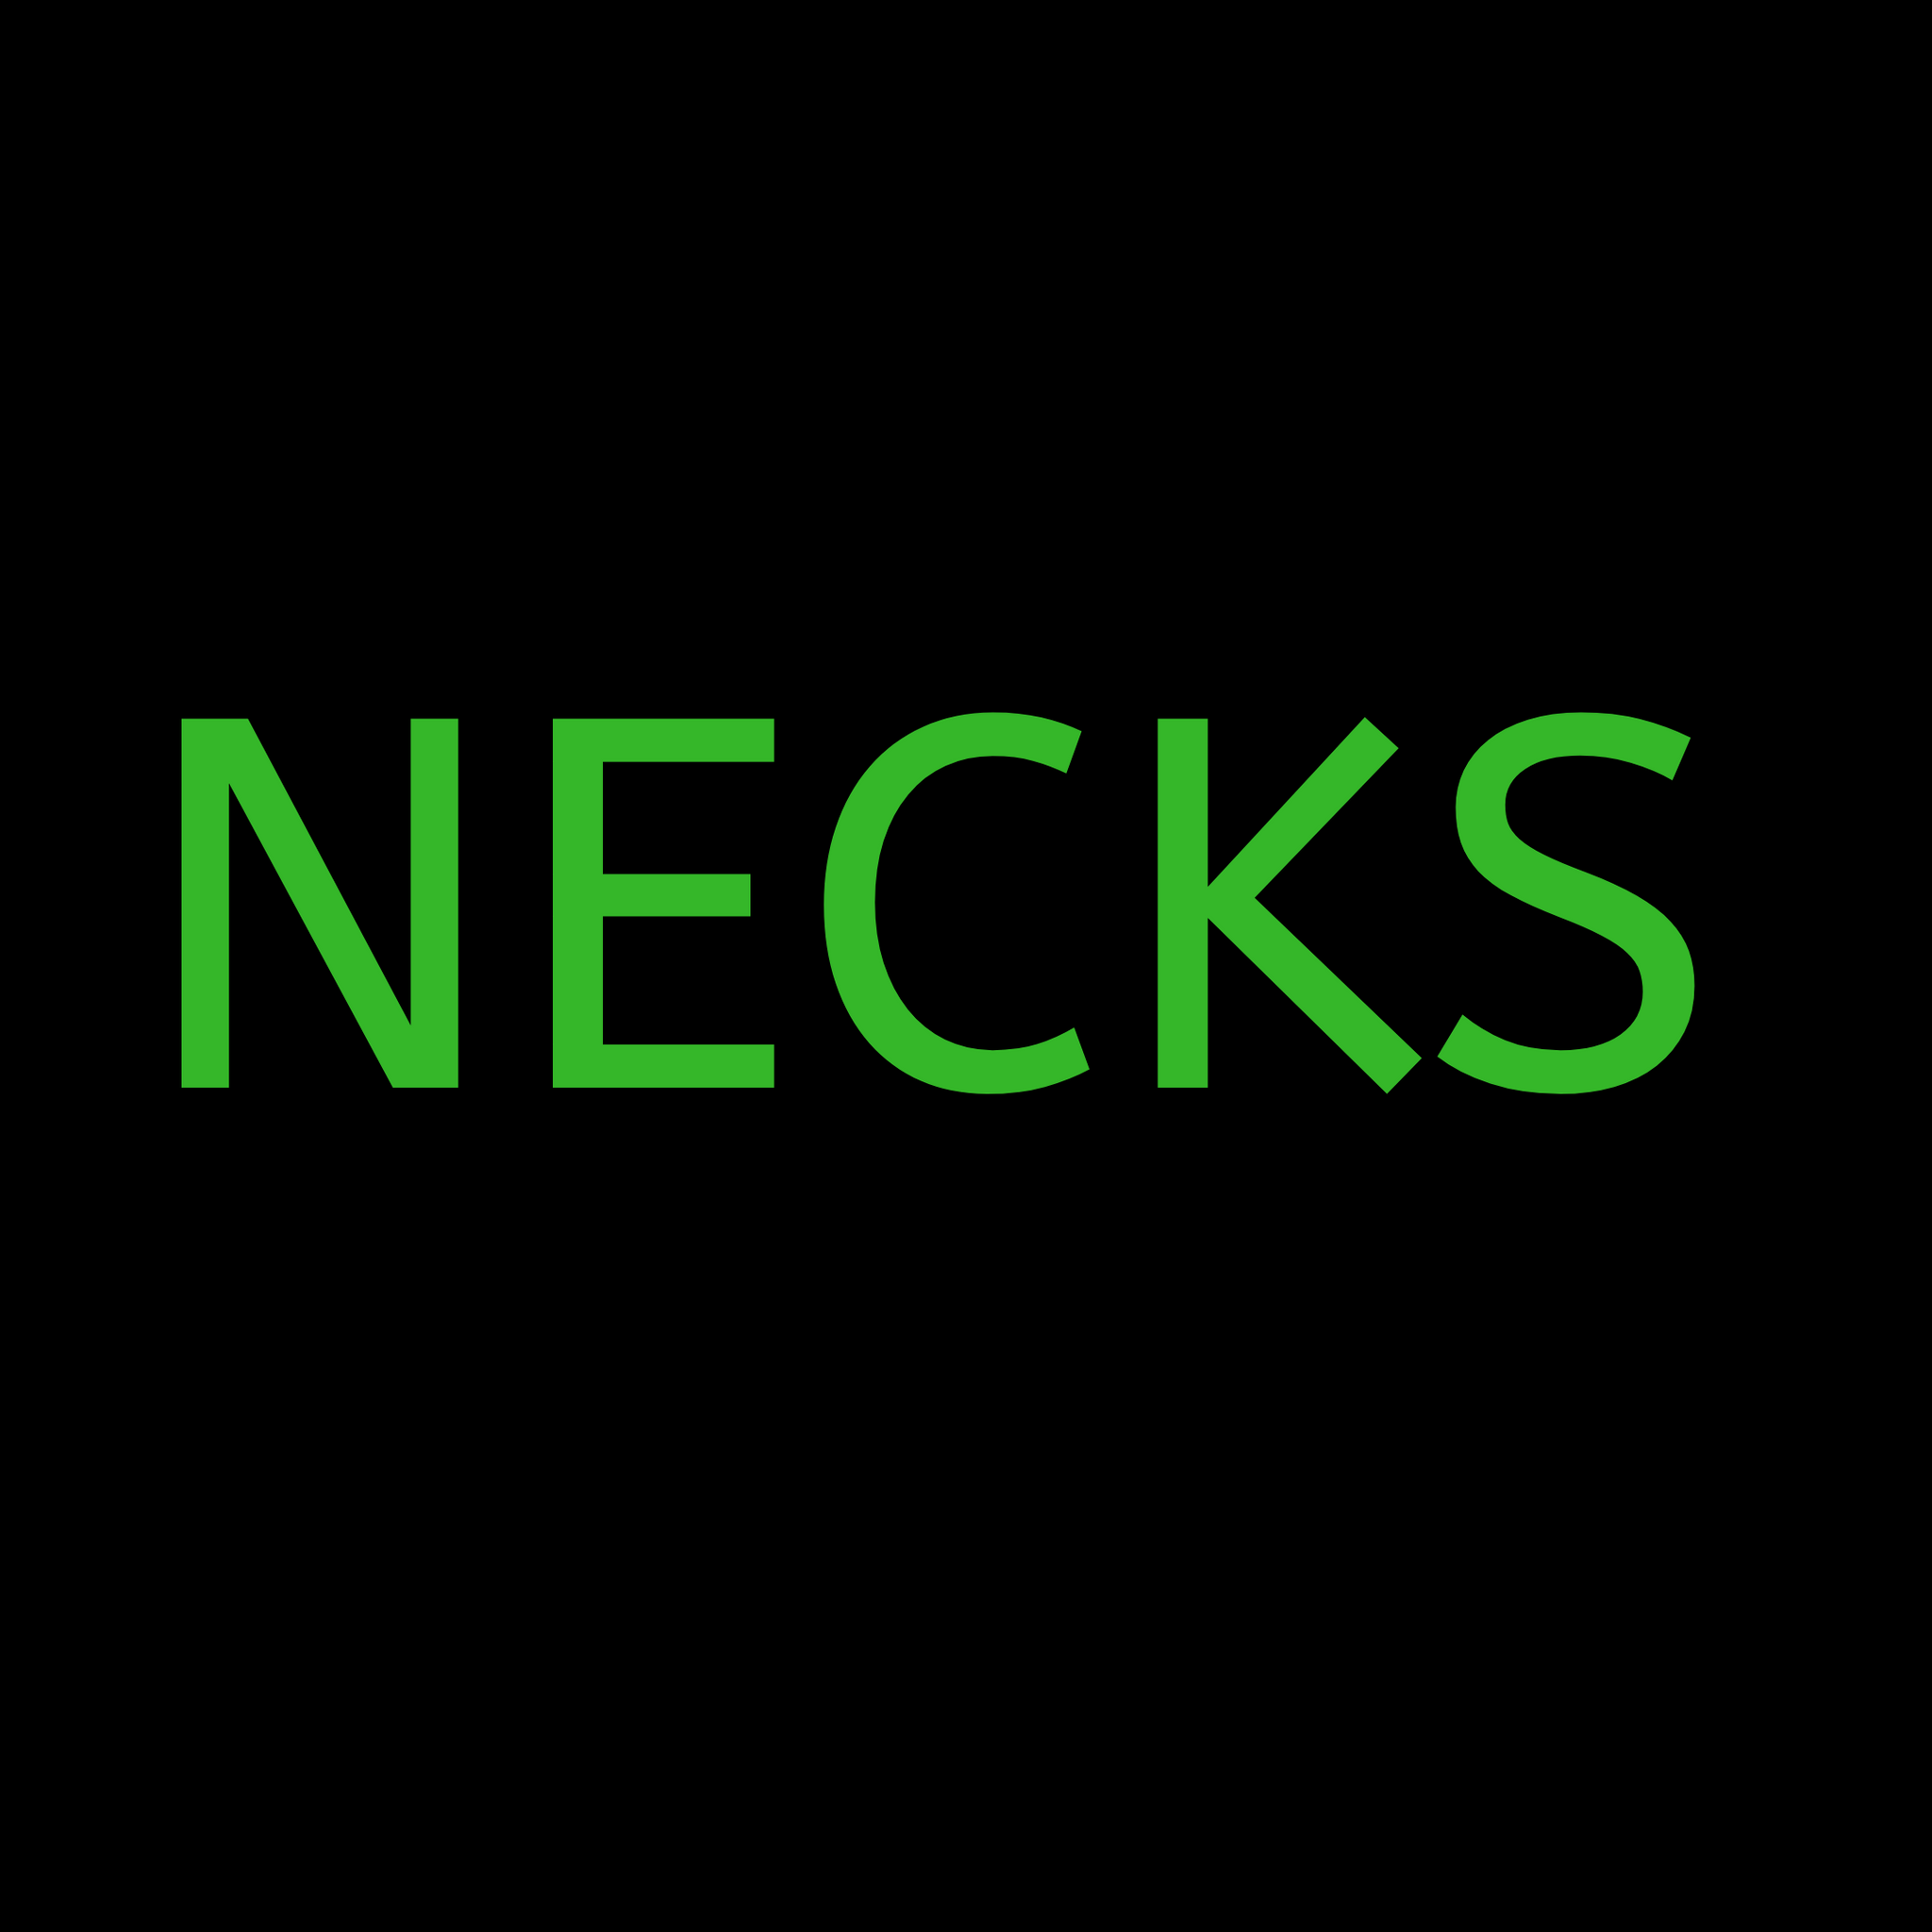 Turkey Necks